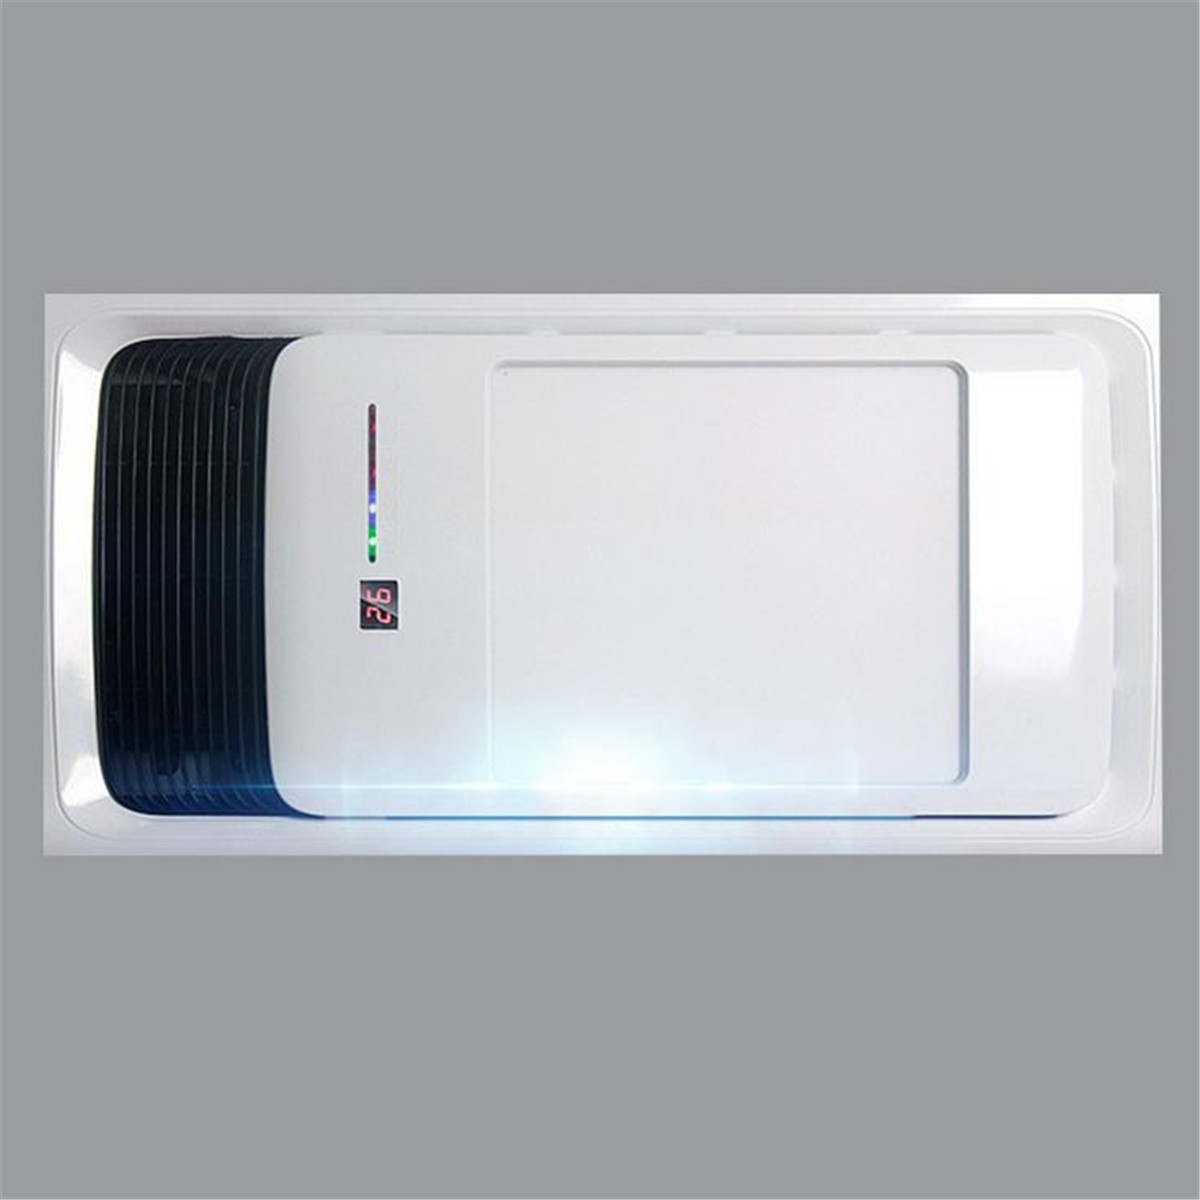 Bathroom Heater Wall Mounted
 Wall Mounted Bathroom Electric Heater Exhaust Fan Warmer